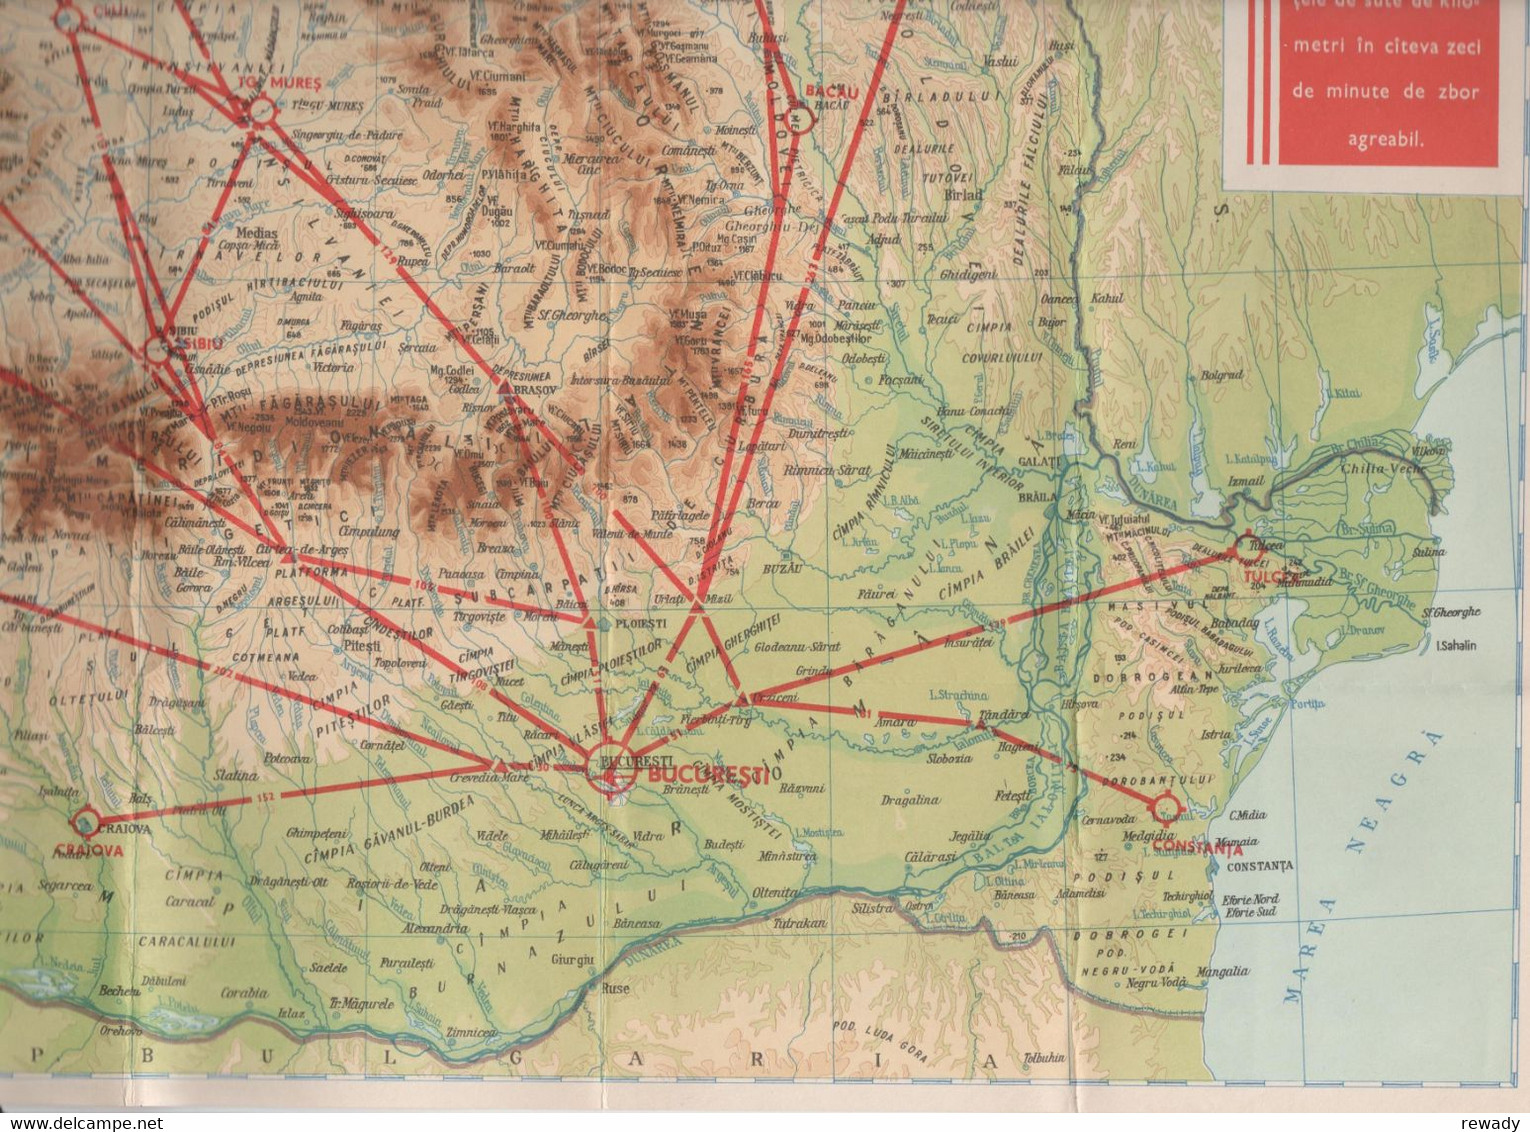 TAROM - Rute Interne / Vintage Flight Route Map / Agentii Romania - Inflight Magazines